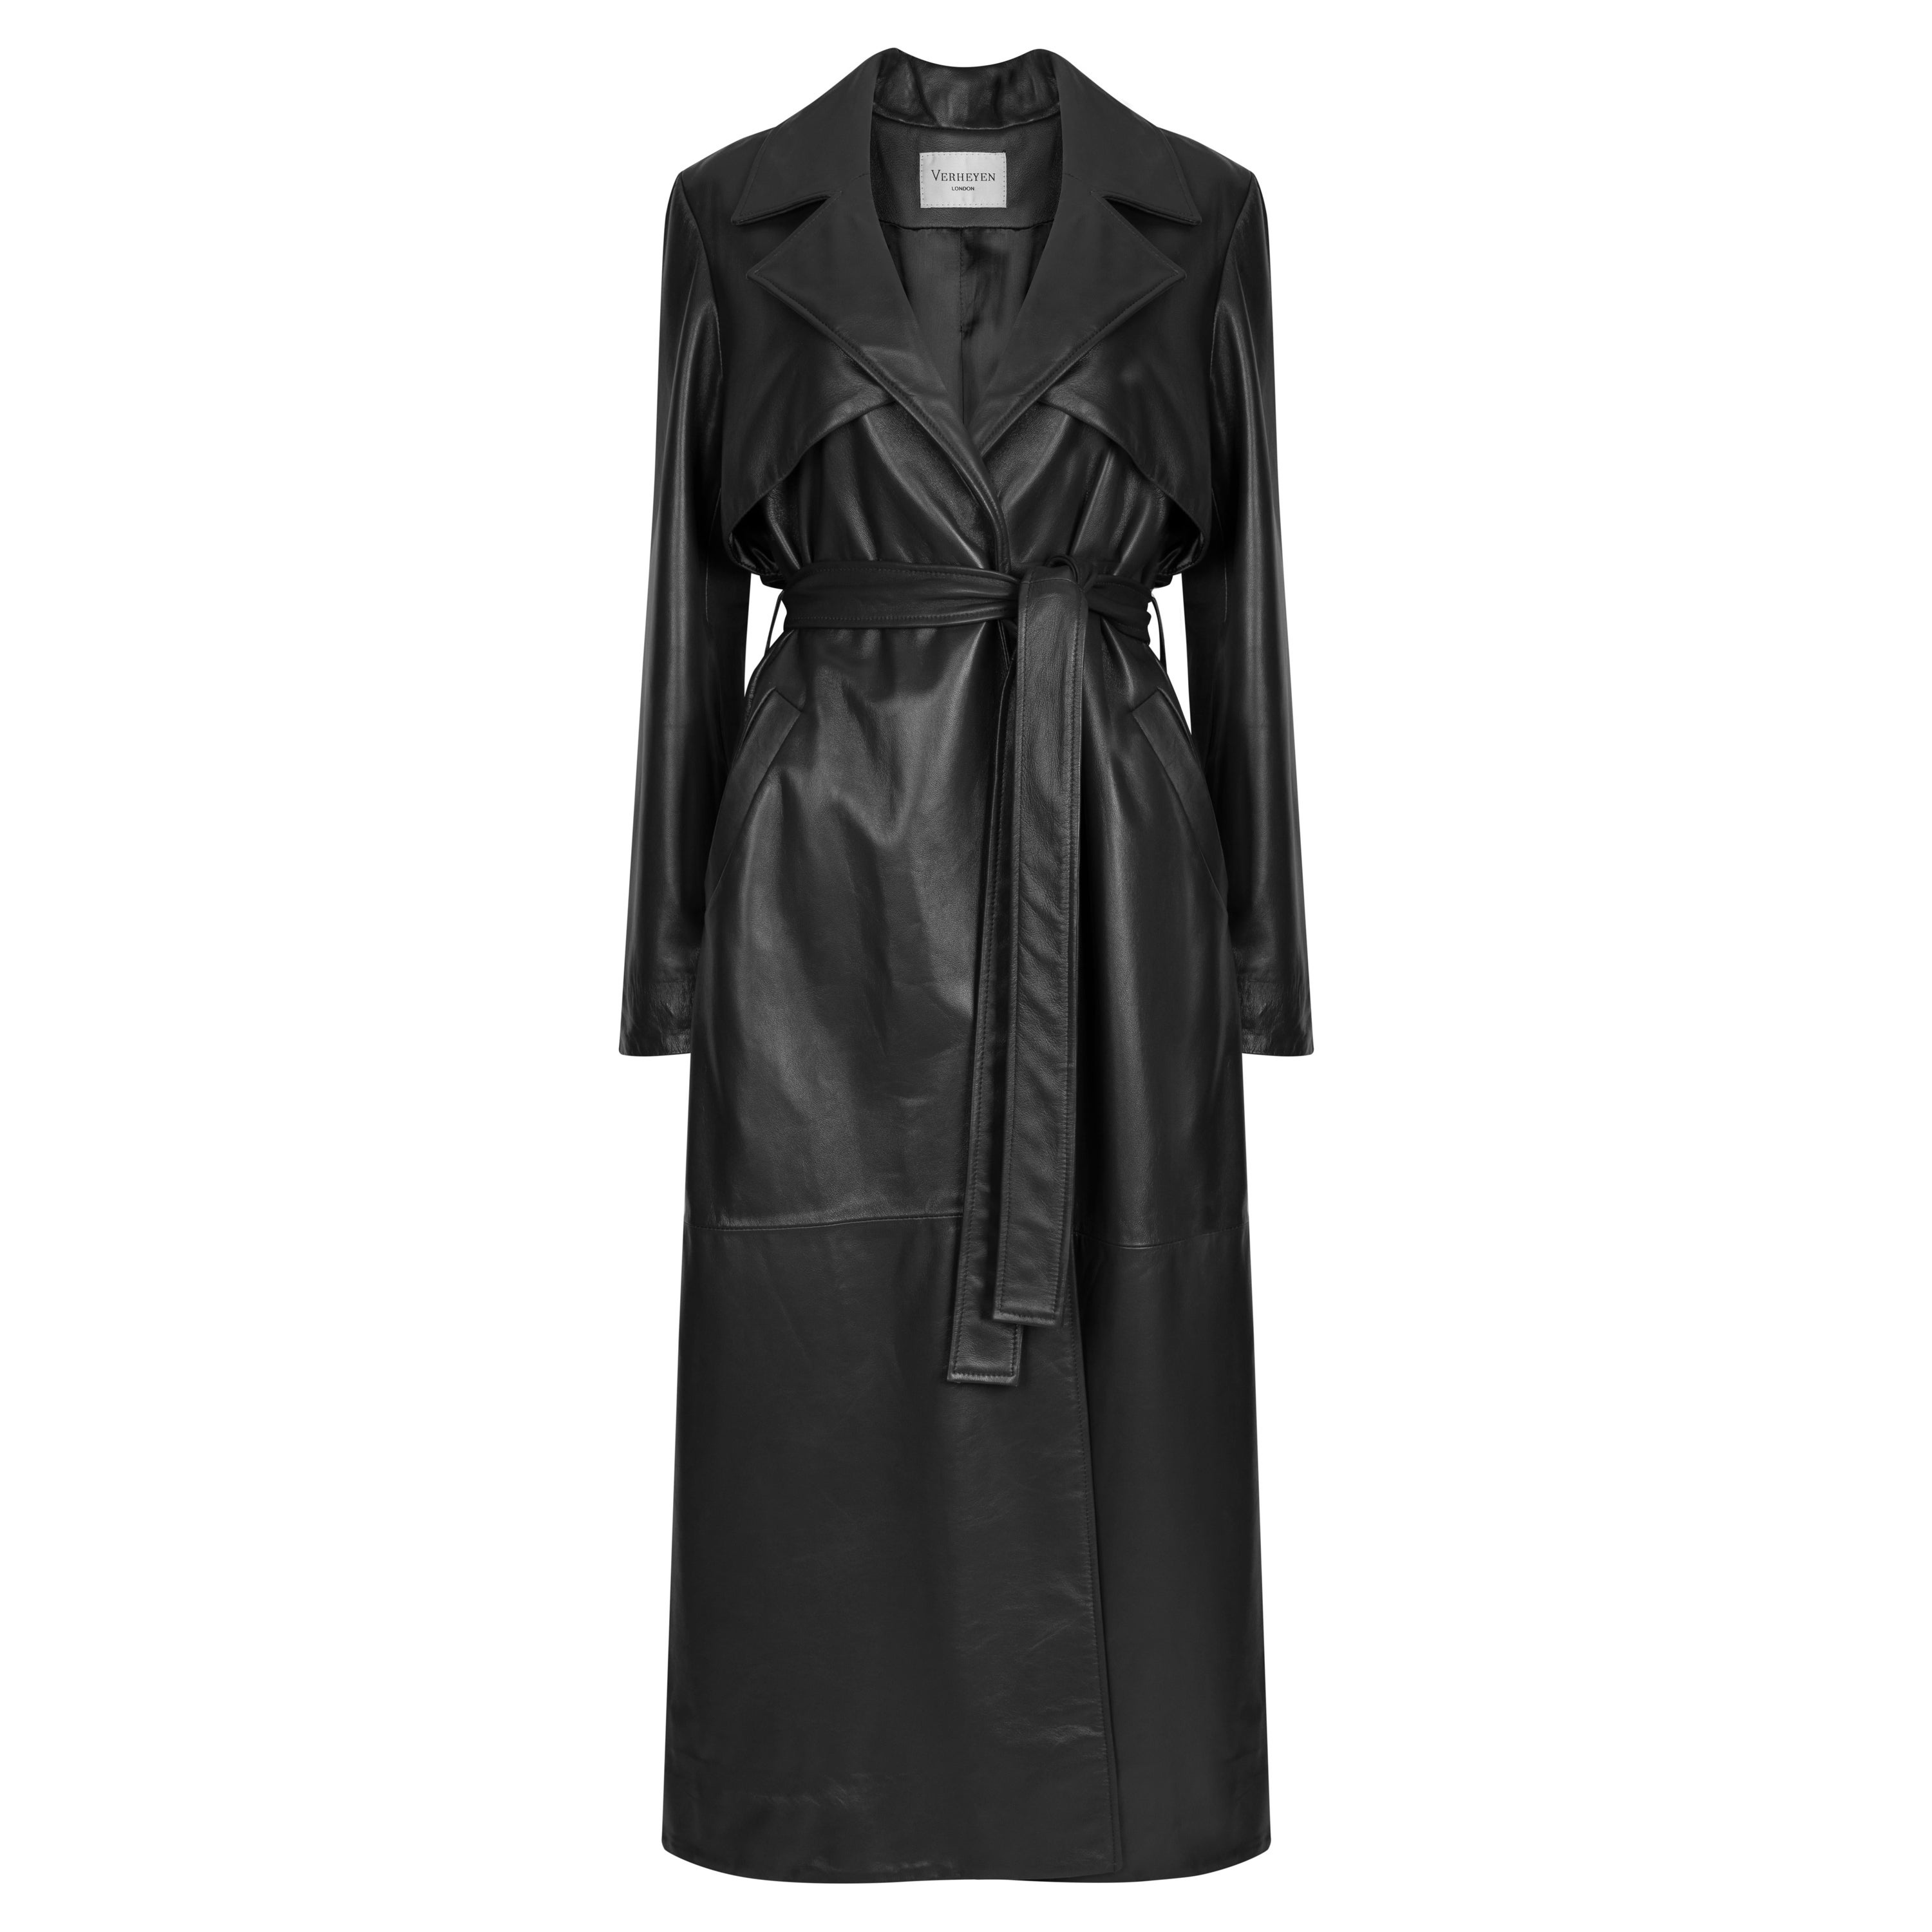 Verheyen London Leather Trench Coat in Black  - Size uk 12 For Sale